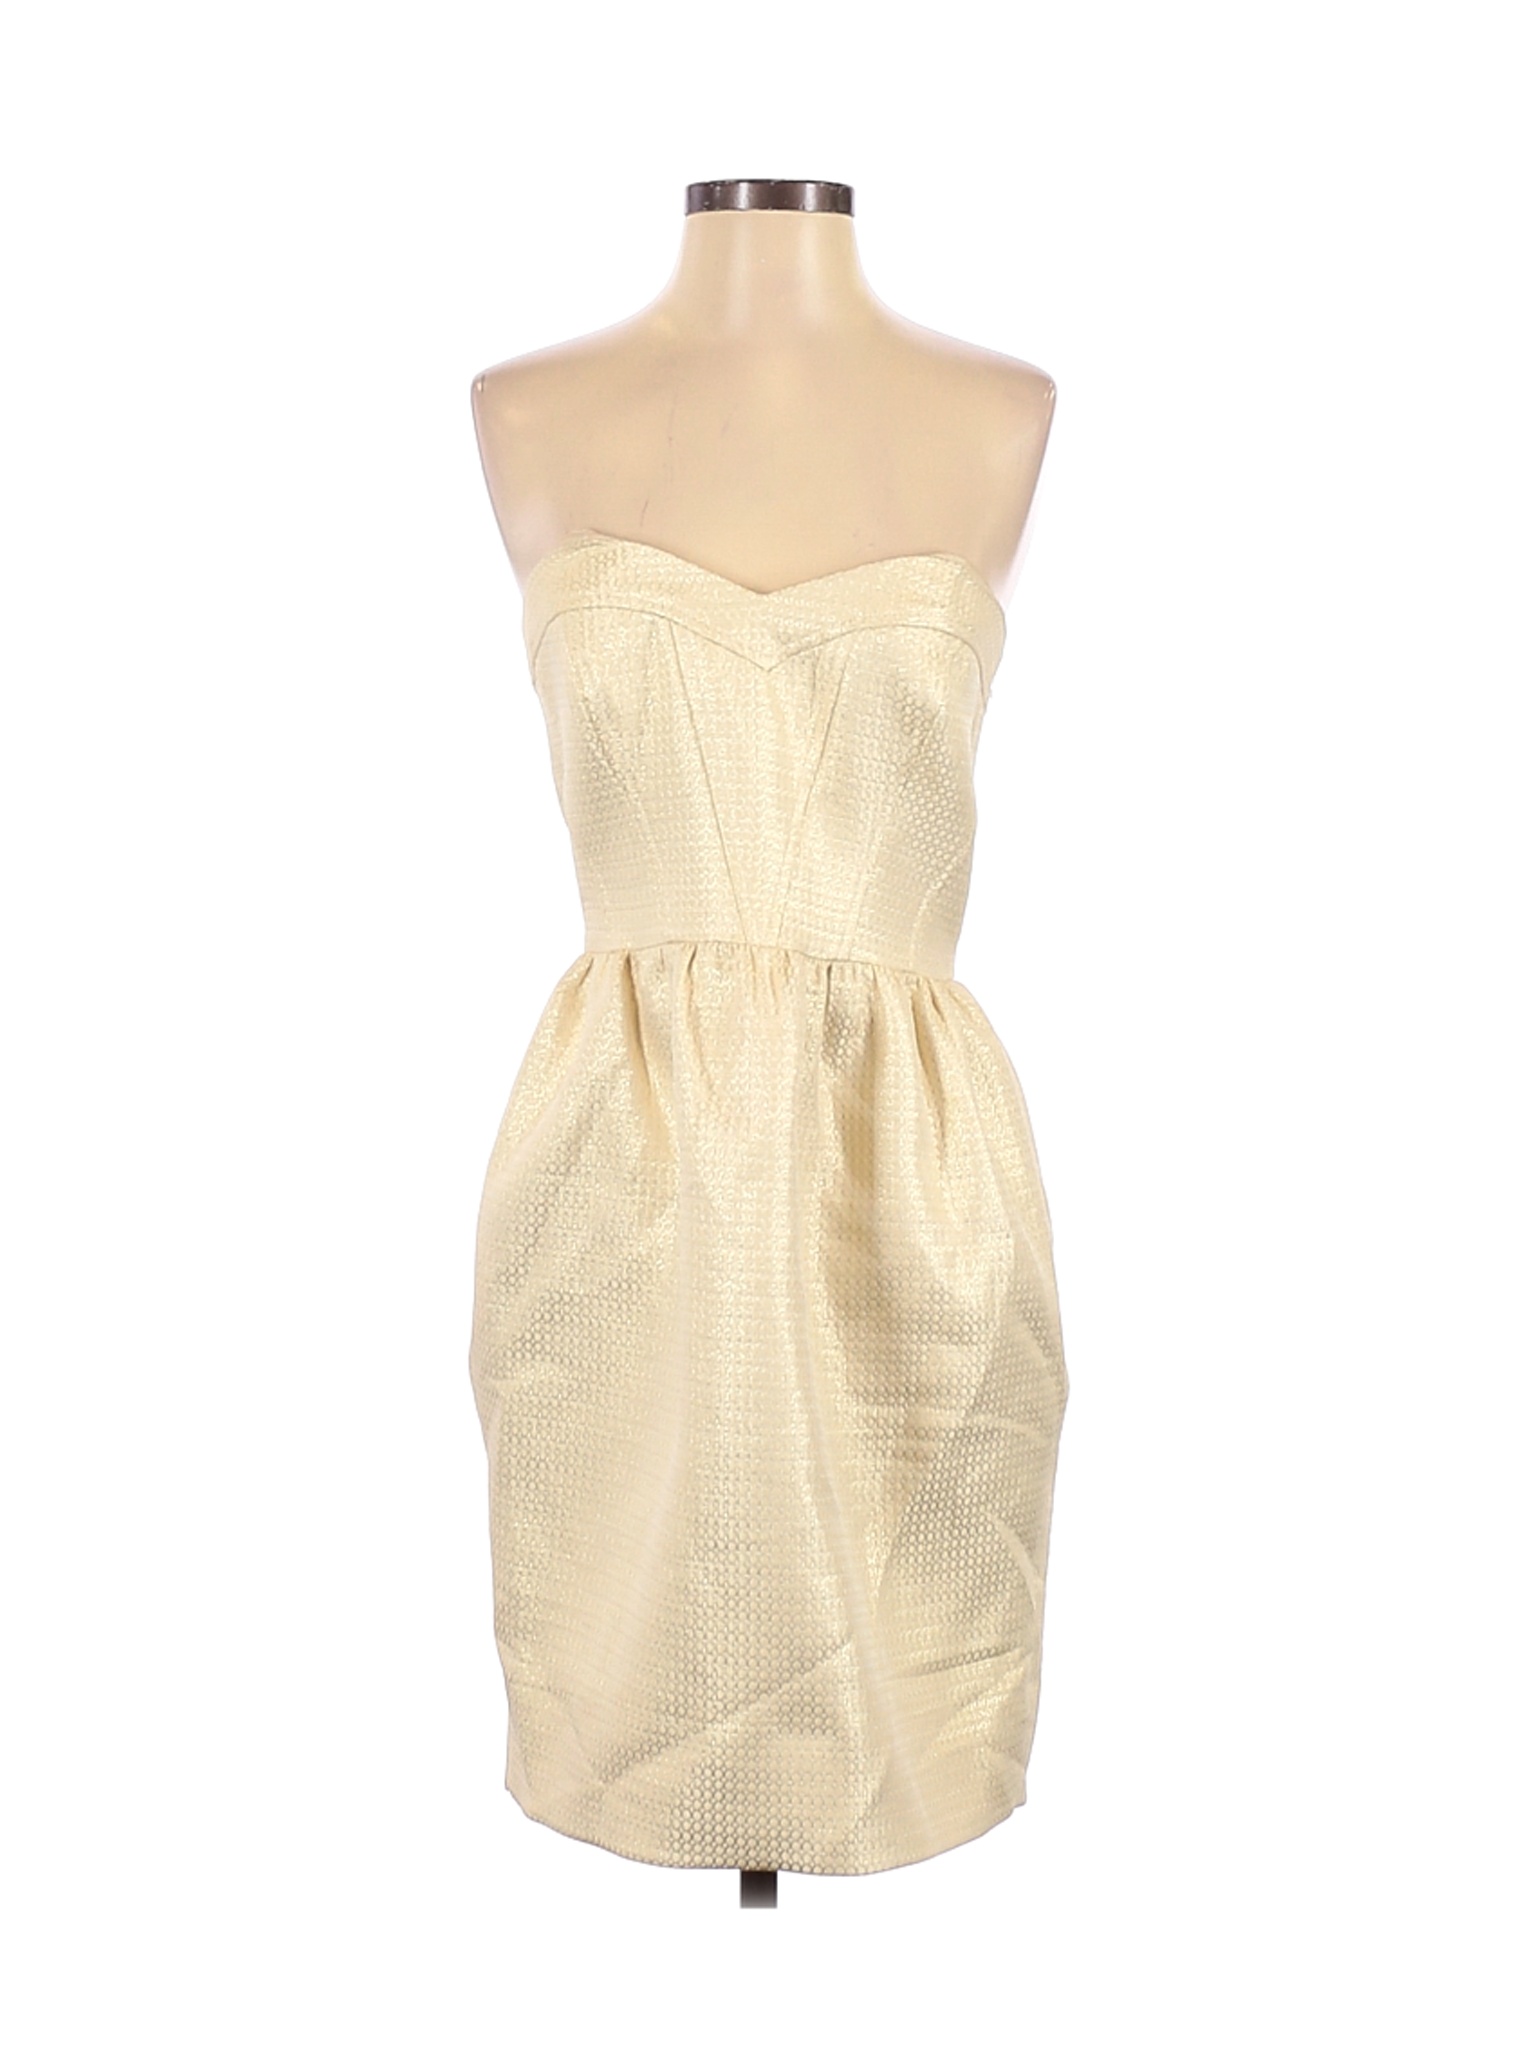 NWT Shoshanna Women Ivory Cocktail Dress 4 | eBay